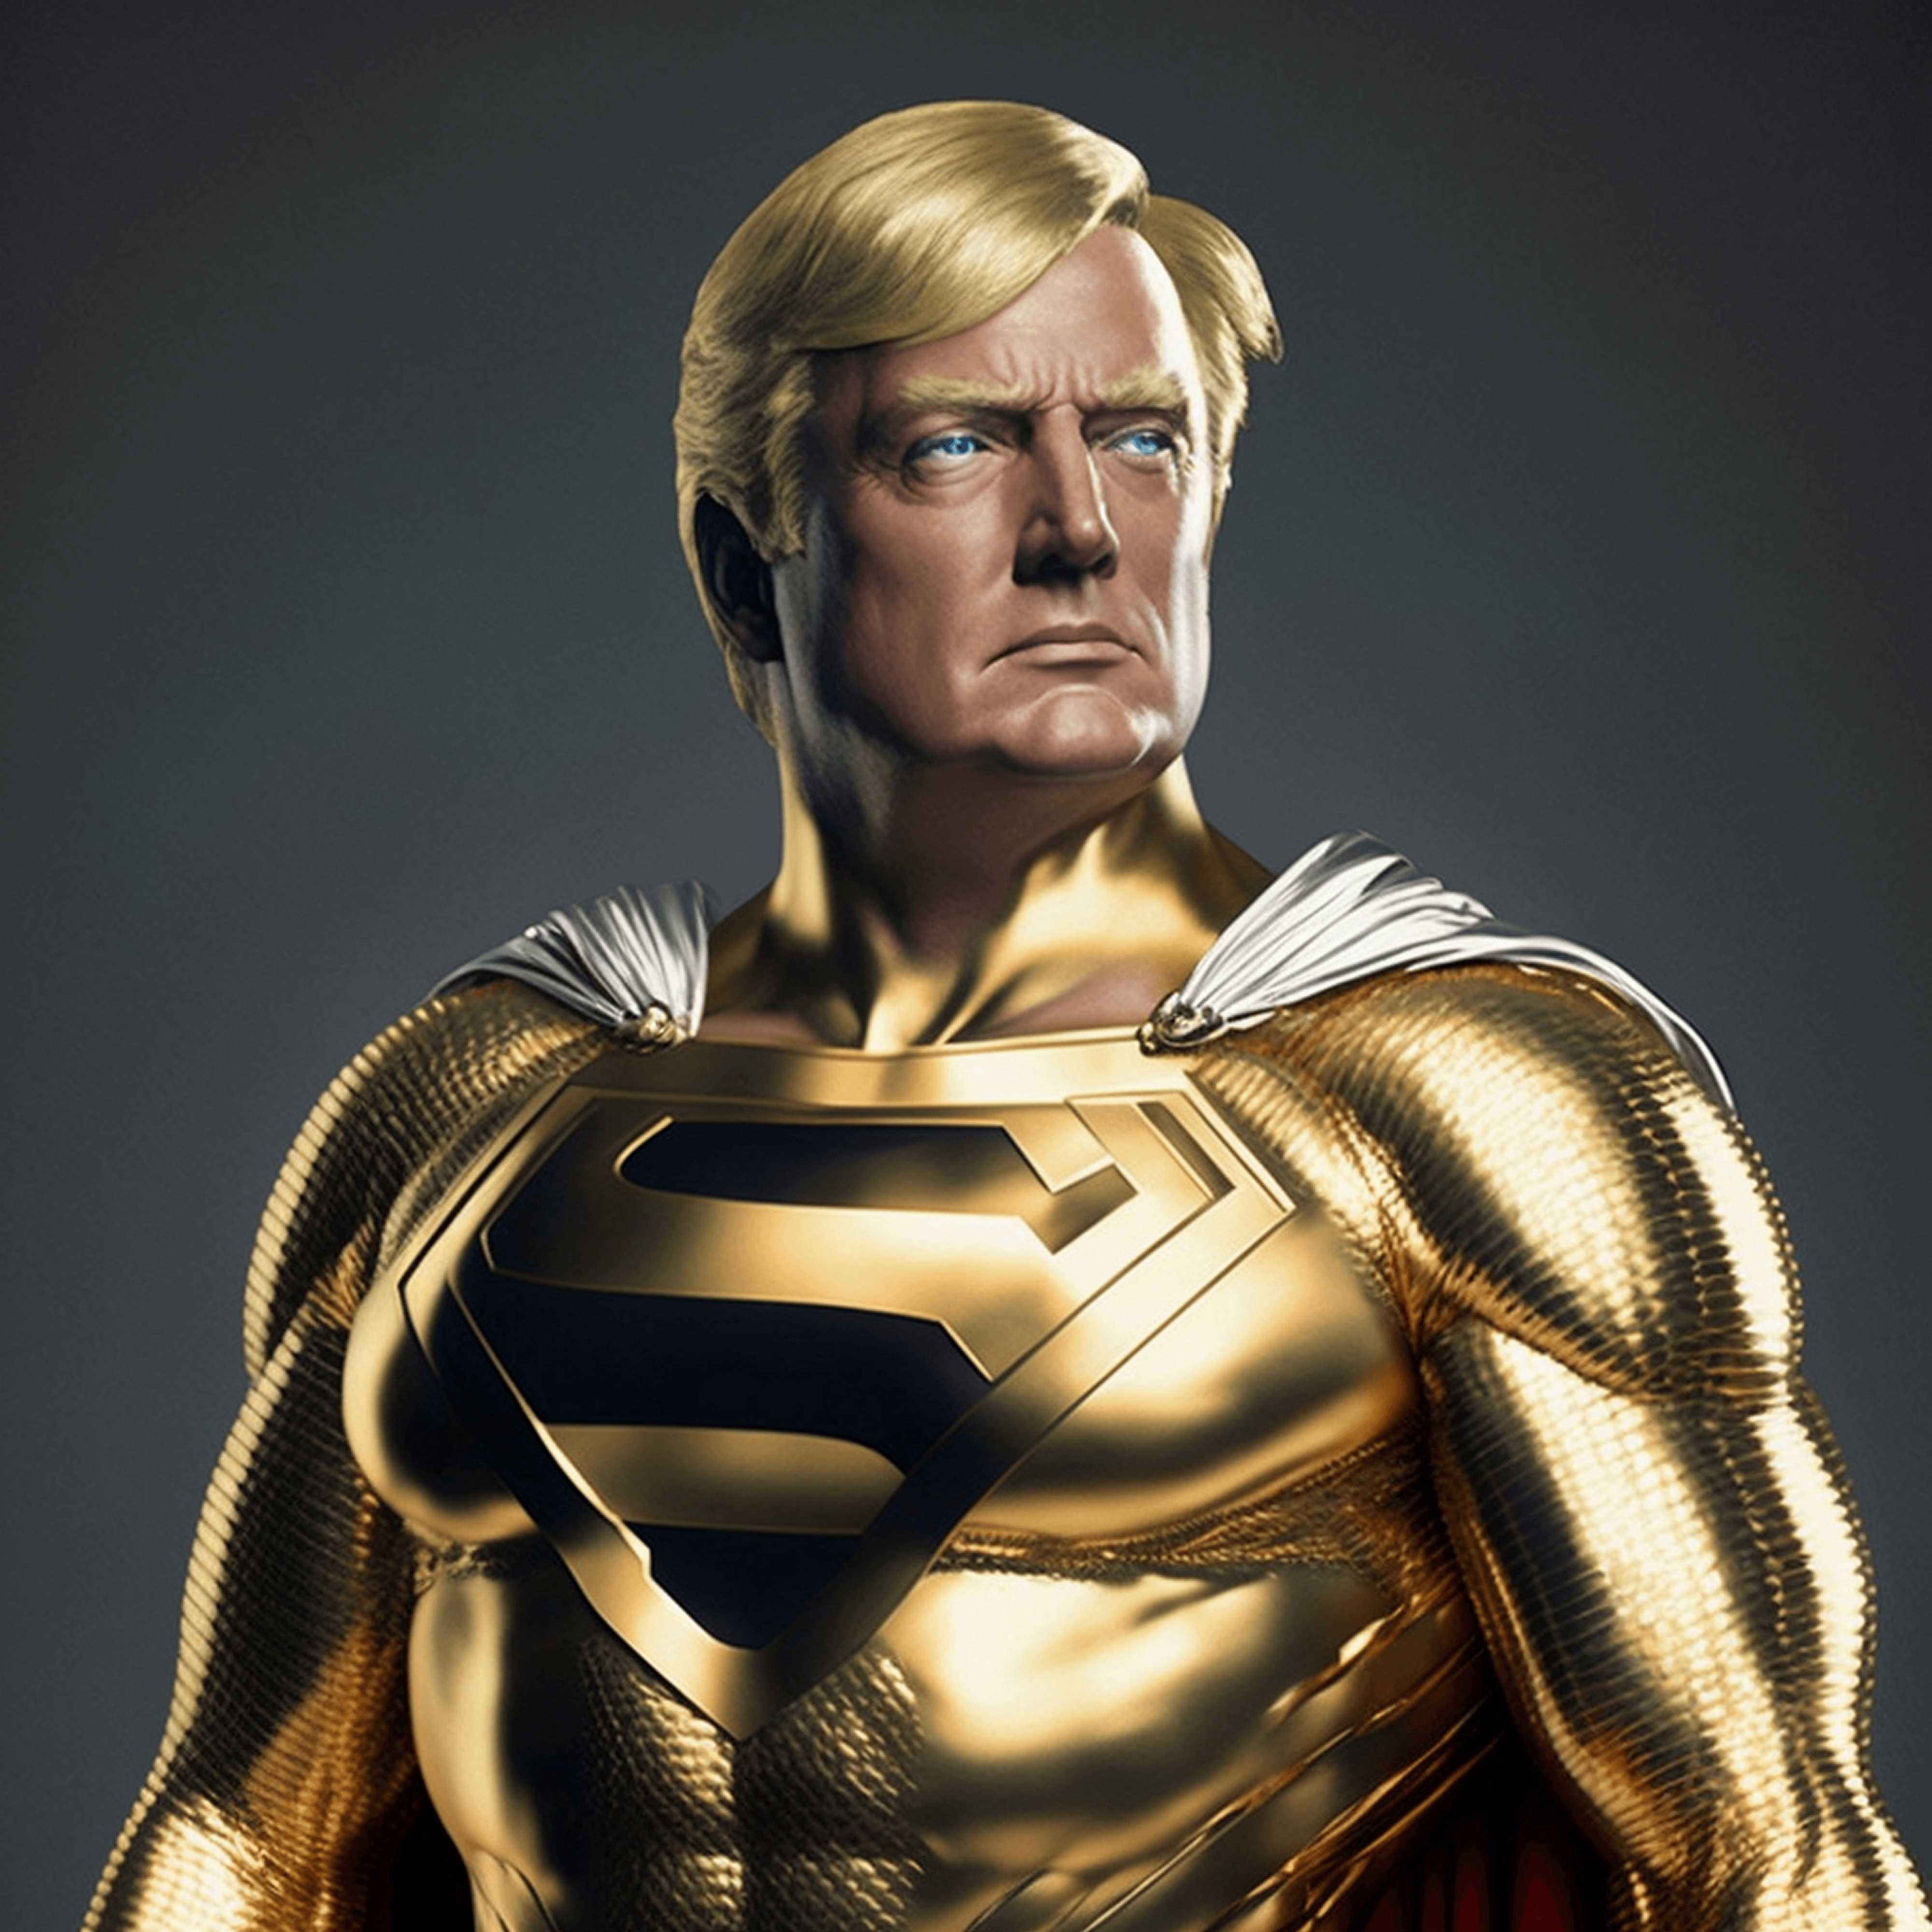 Superhero Gold No. 9 by Sollog